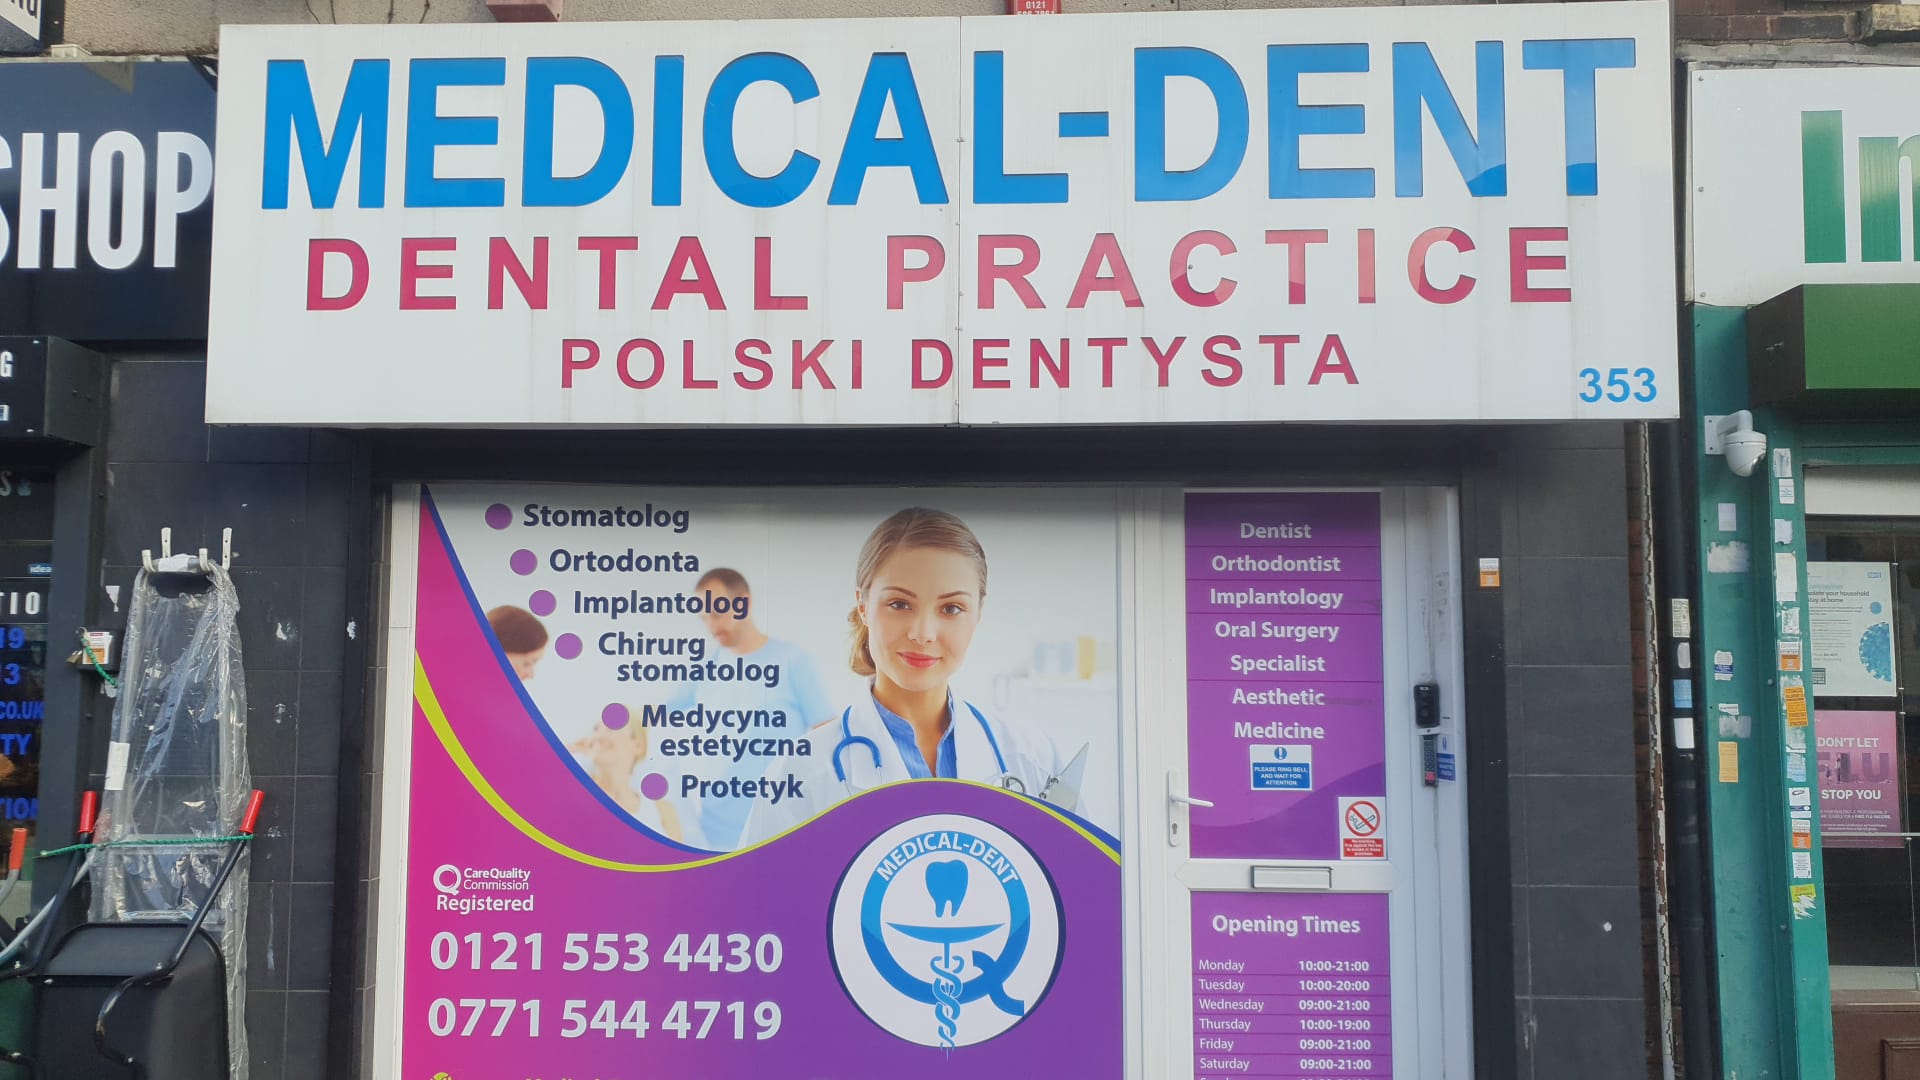 Medical – Dent practice